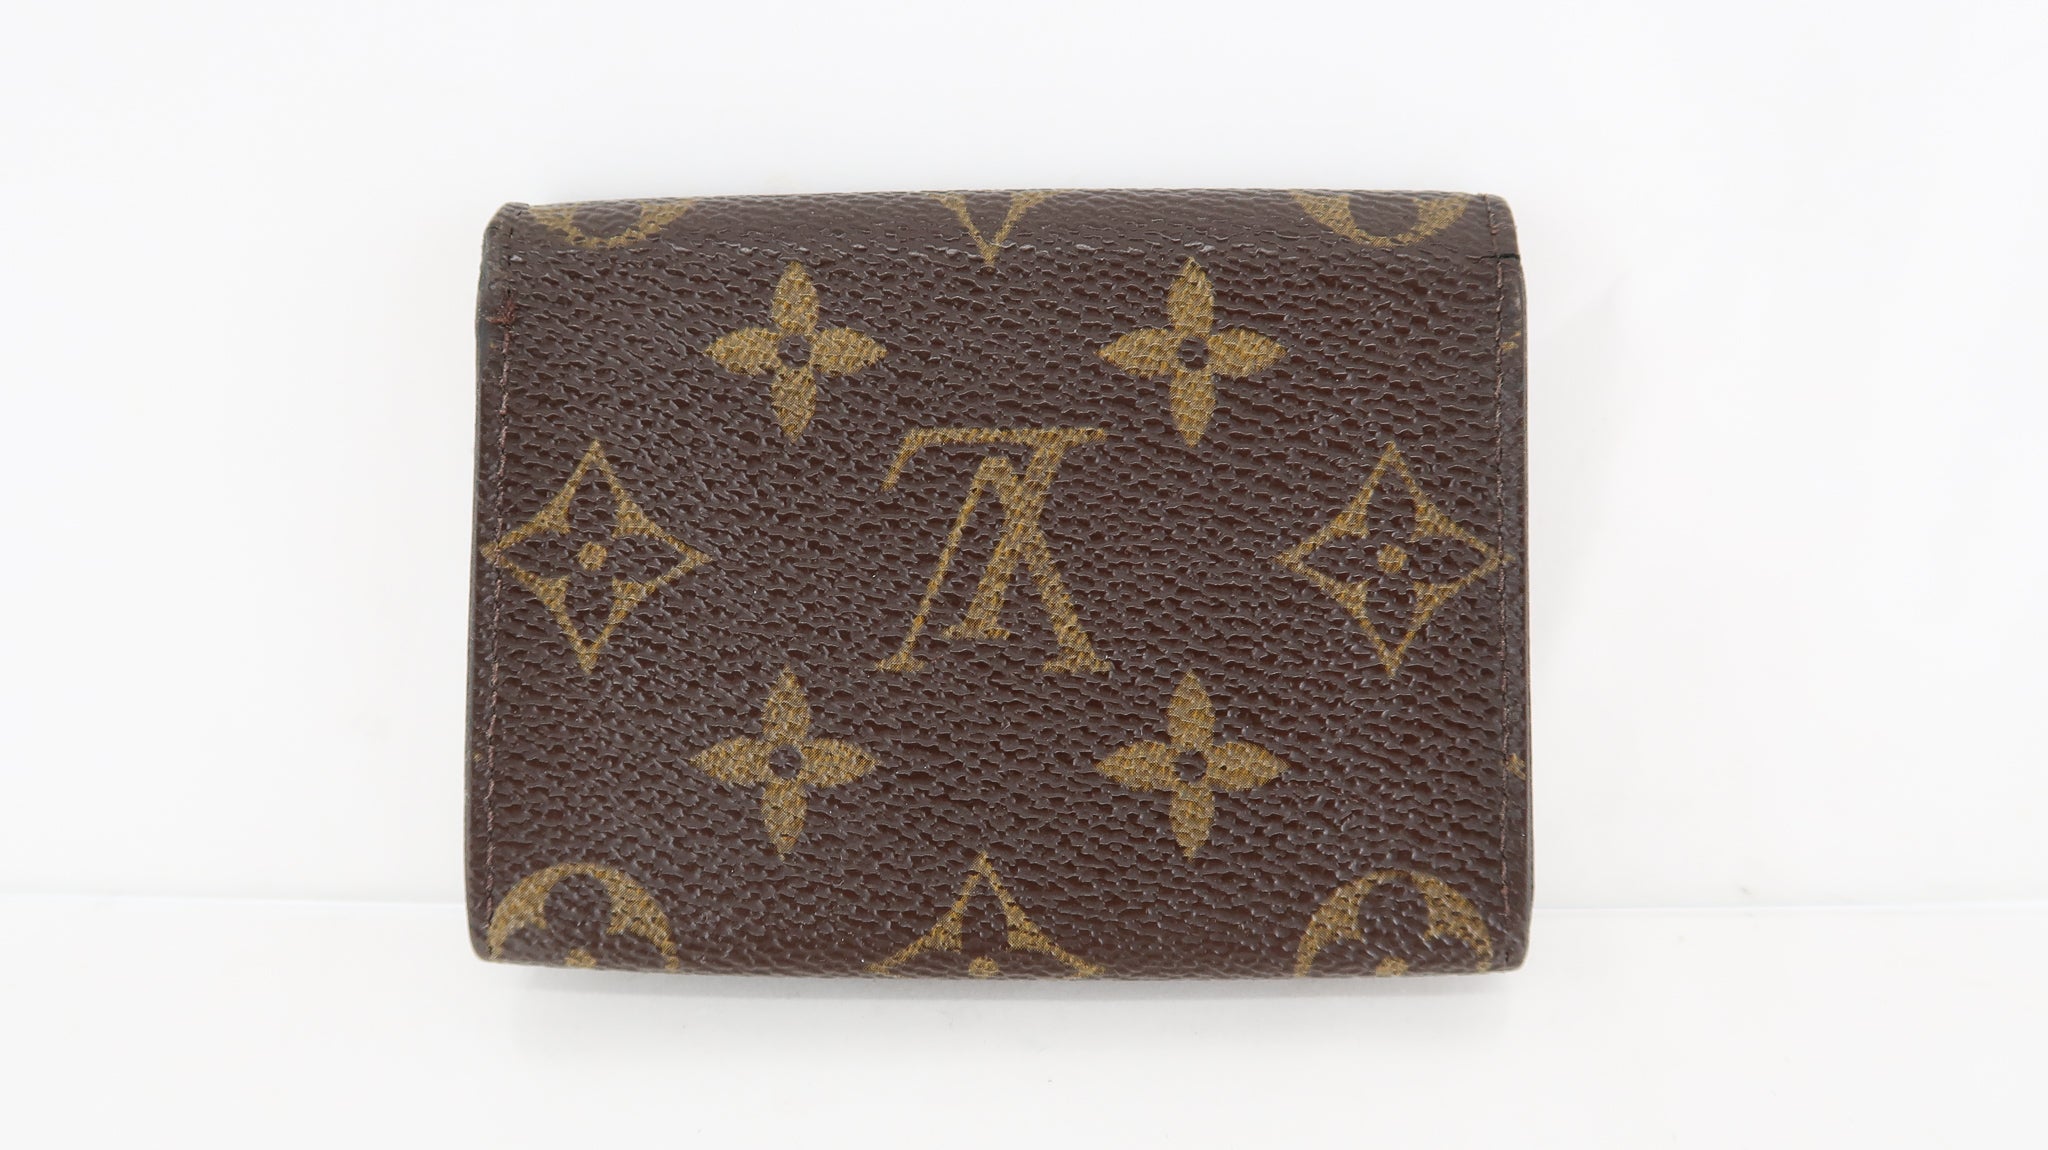 Louis Vuitton Womens Monogram Card Holder Wallet